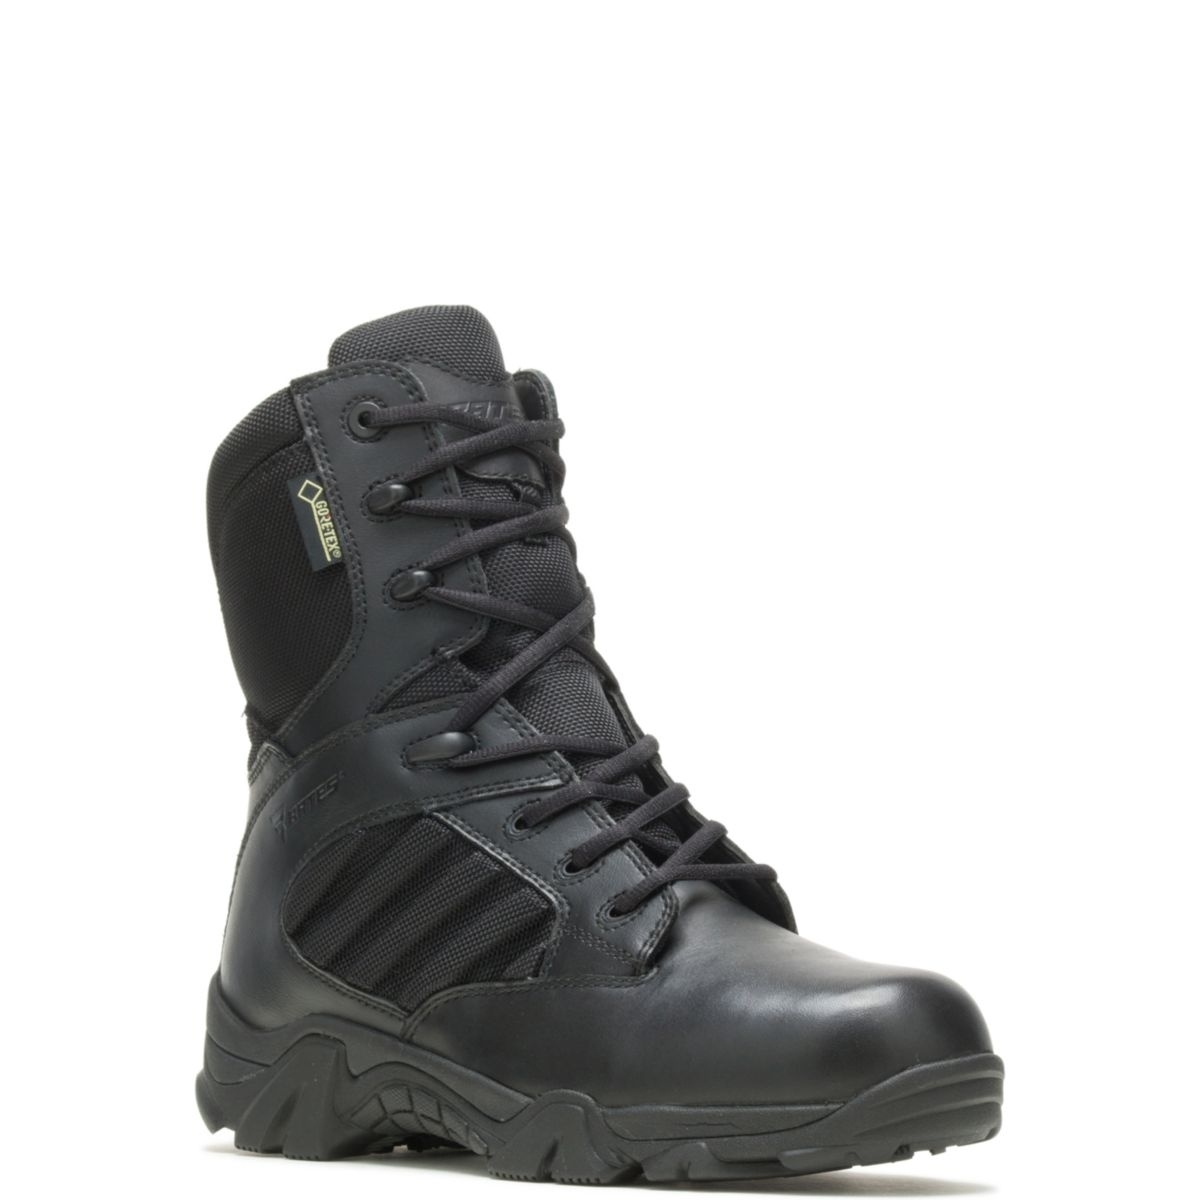 Bates Men's GX-8 Insulated Side-Zip GORE-TEXÂ® Waterproof Boot Black - E02488 BLACK - BLACK, 15-M